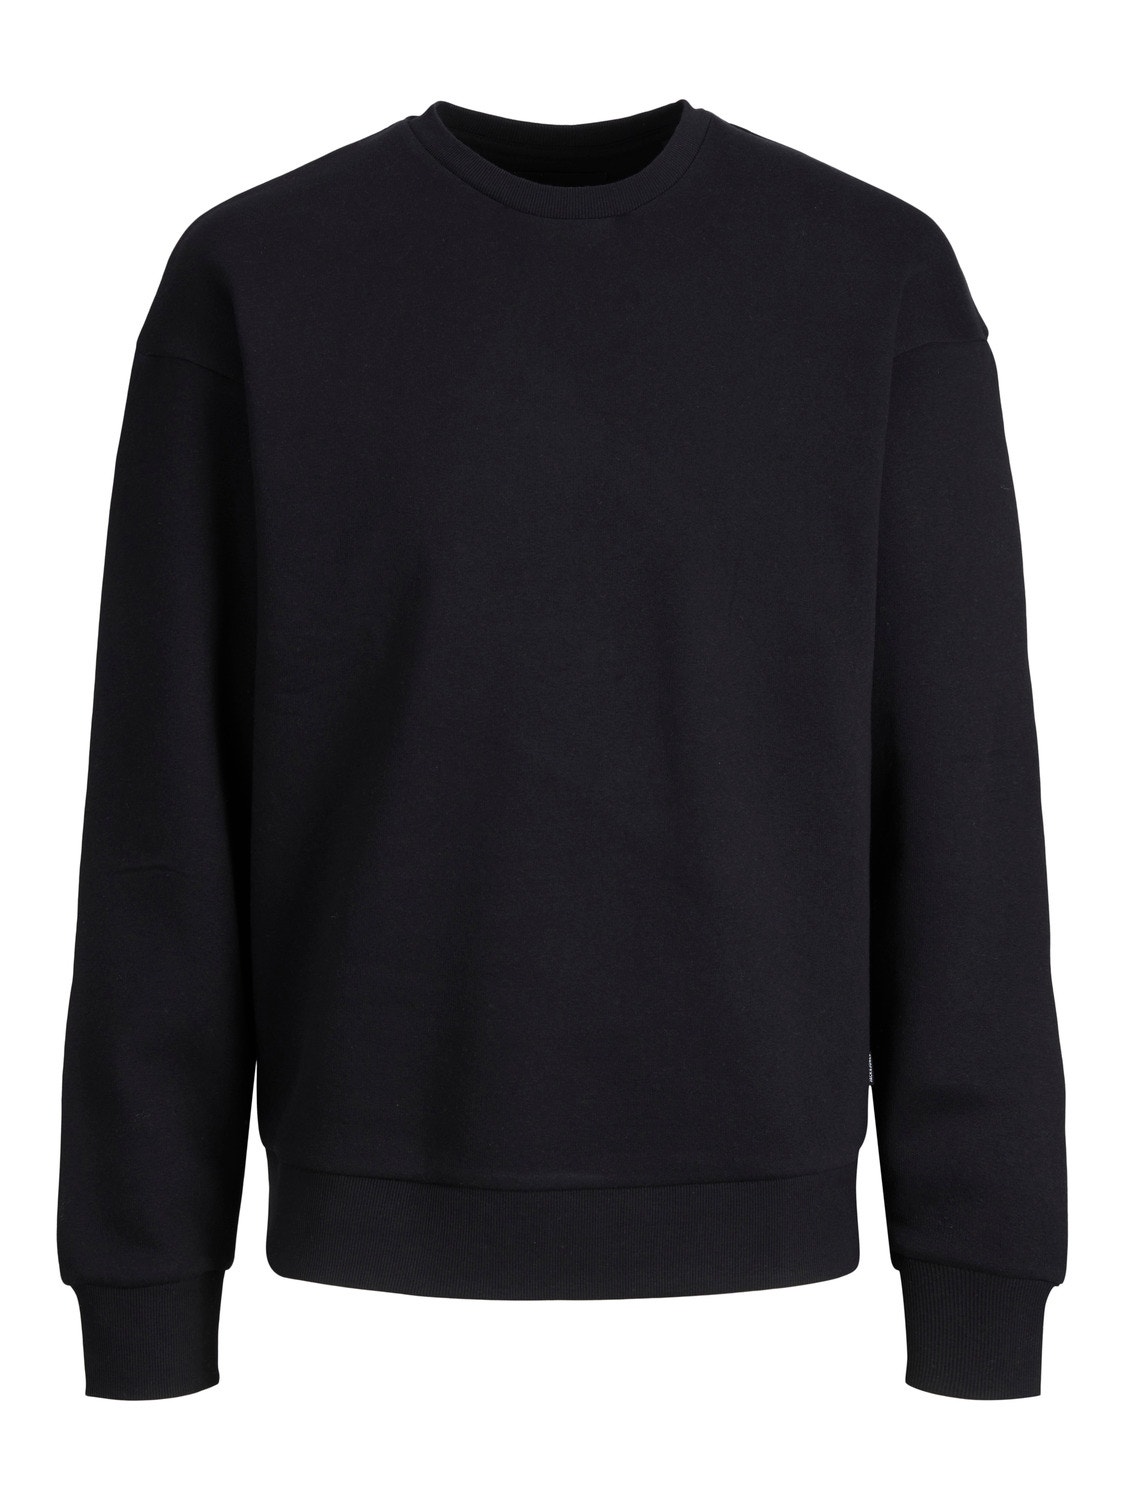 Jack & Jones Plain Sweatshirt -Black - 12208182